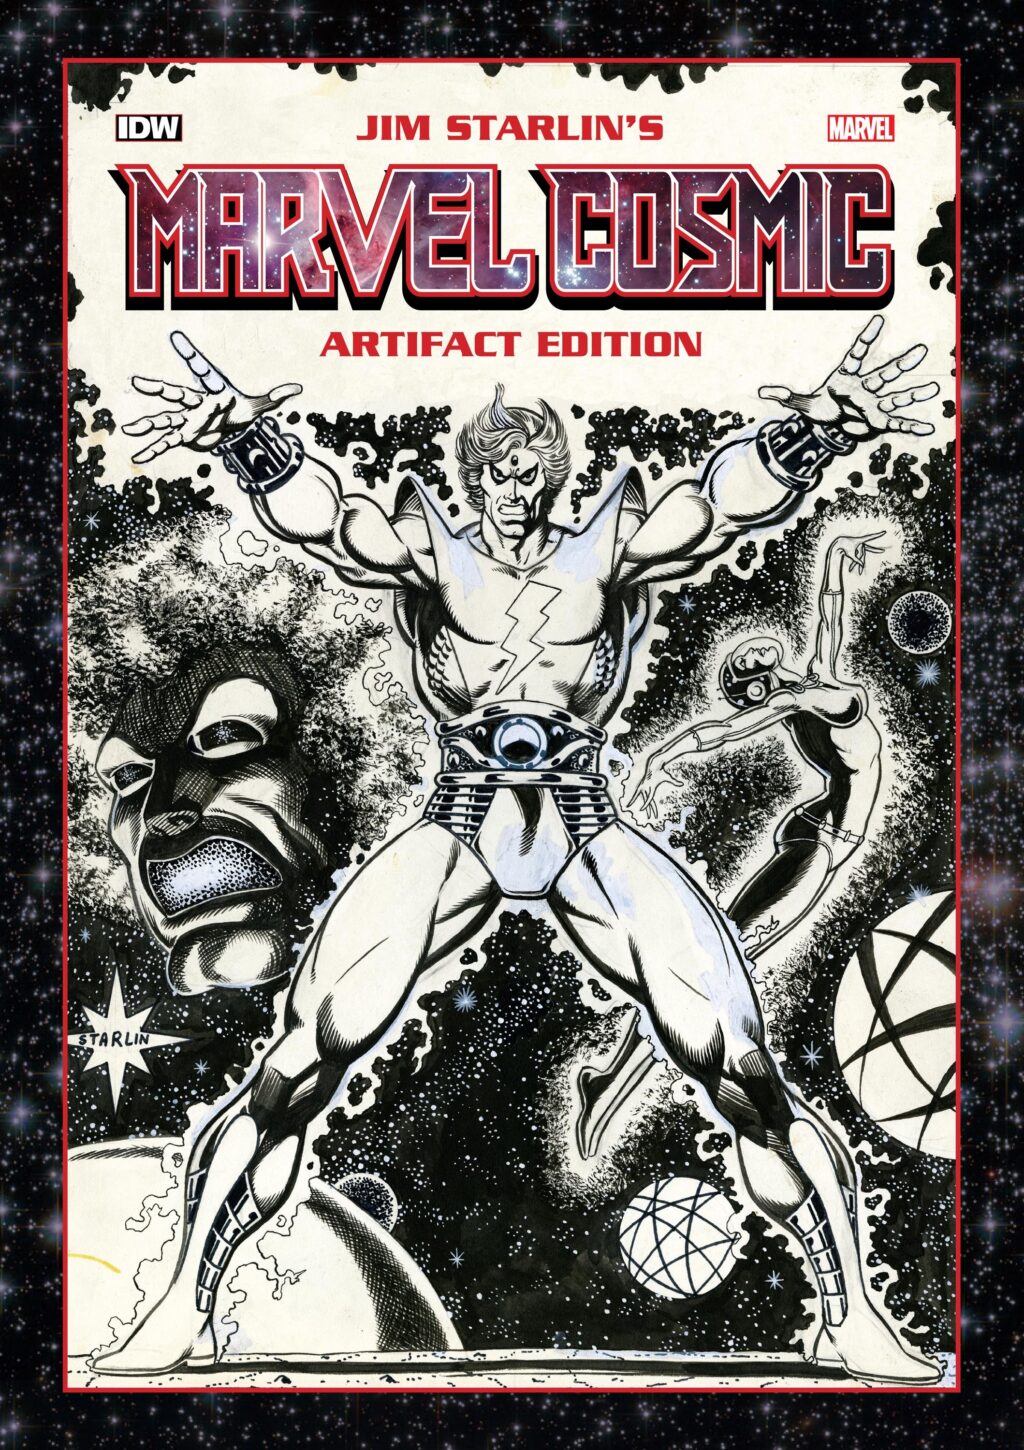 Jim Starlin's Marvel Cosmic Artifact Edition cover prelim